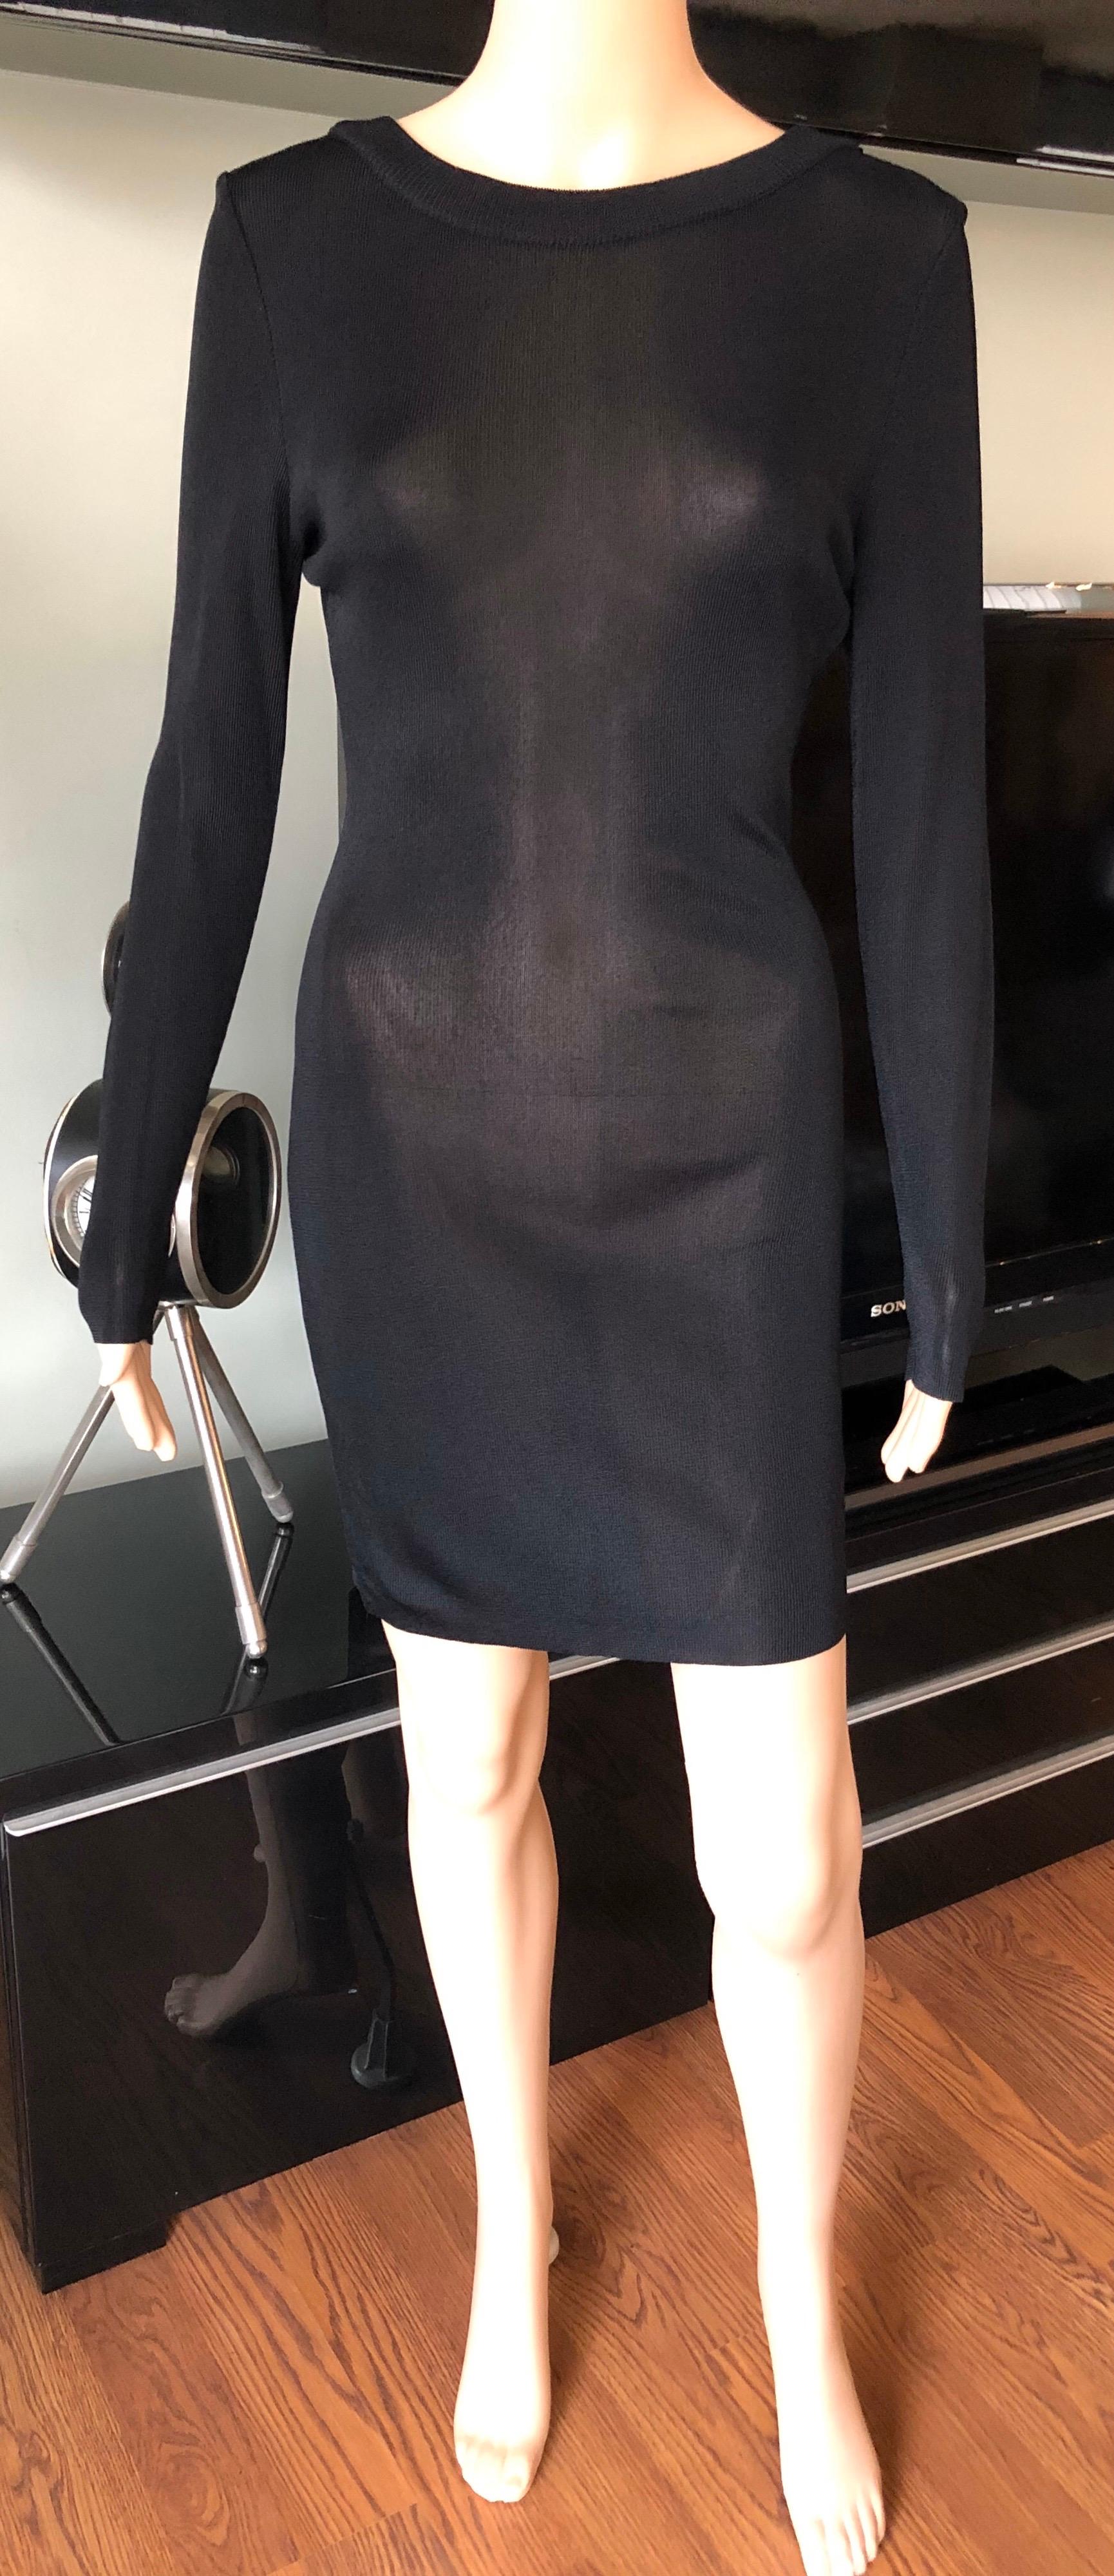 Gianni Versace c. 1980 Vintage Semi-Sheer Bodycon Knit Black Dress For Sale 2